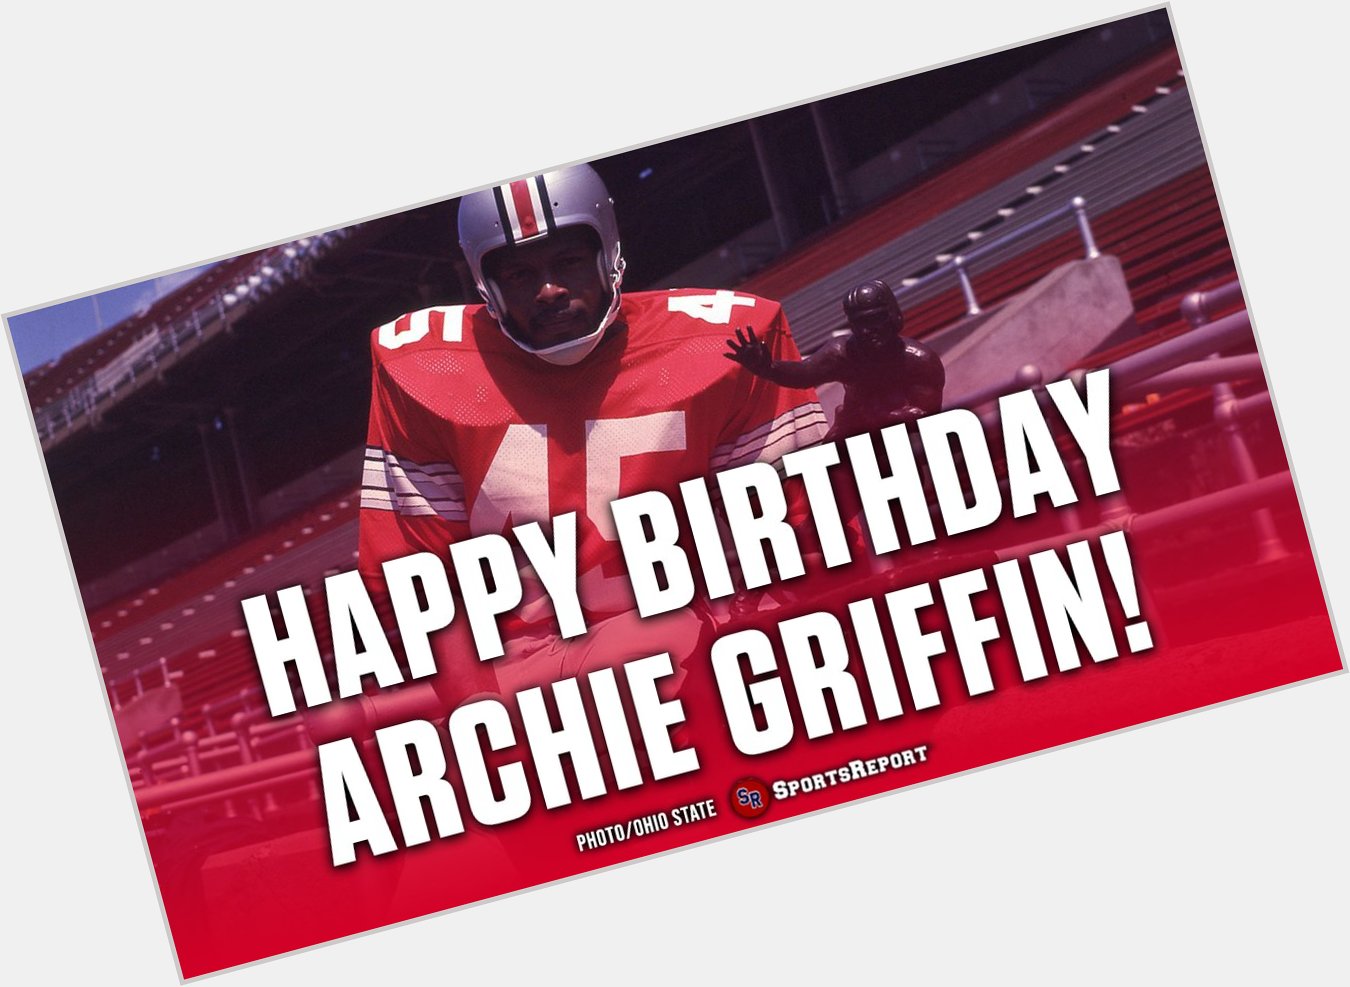  Fans, let\s wish legend Archie Griffin a Happy Birthday! GO 